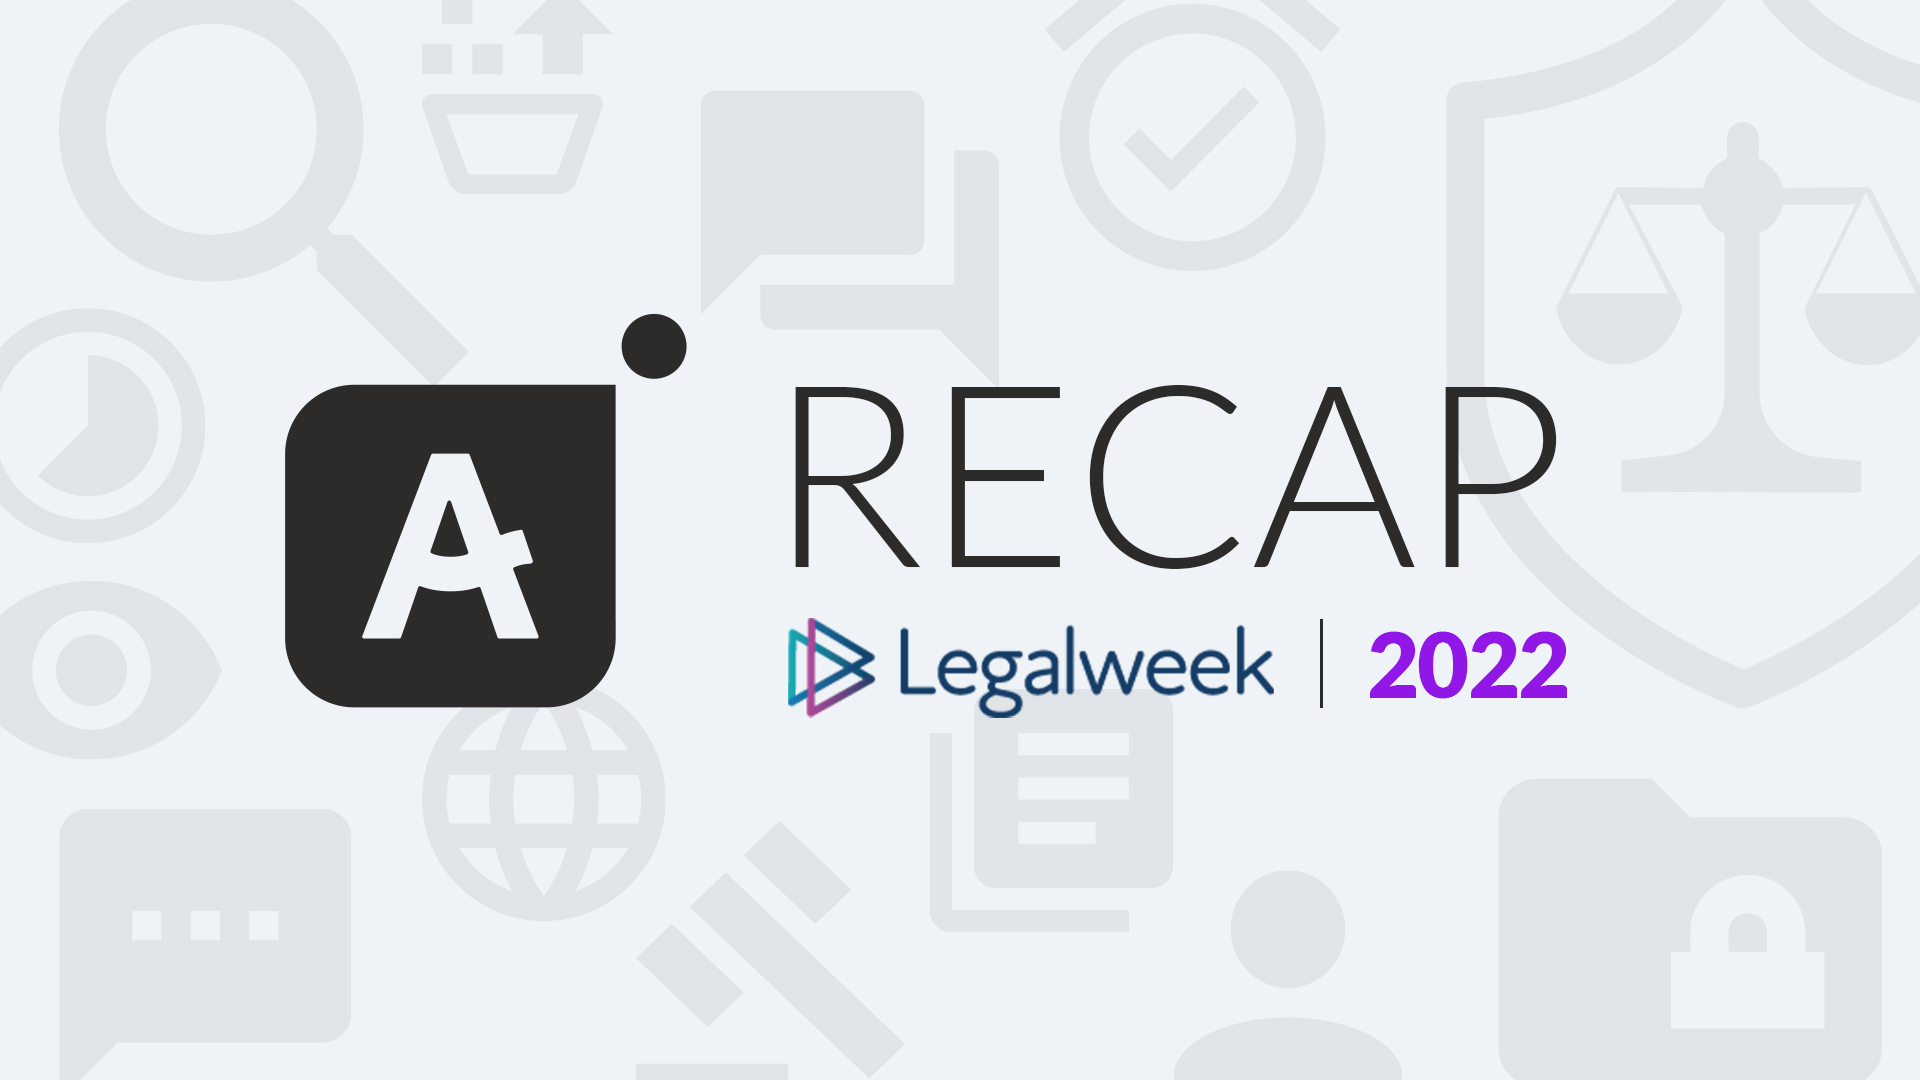 Legalweek 2022 – an Aware Perspective